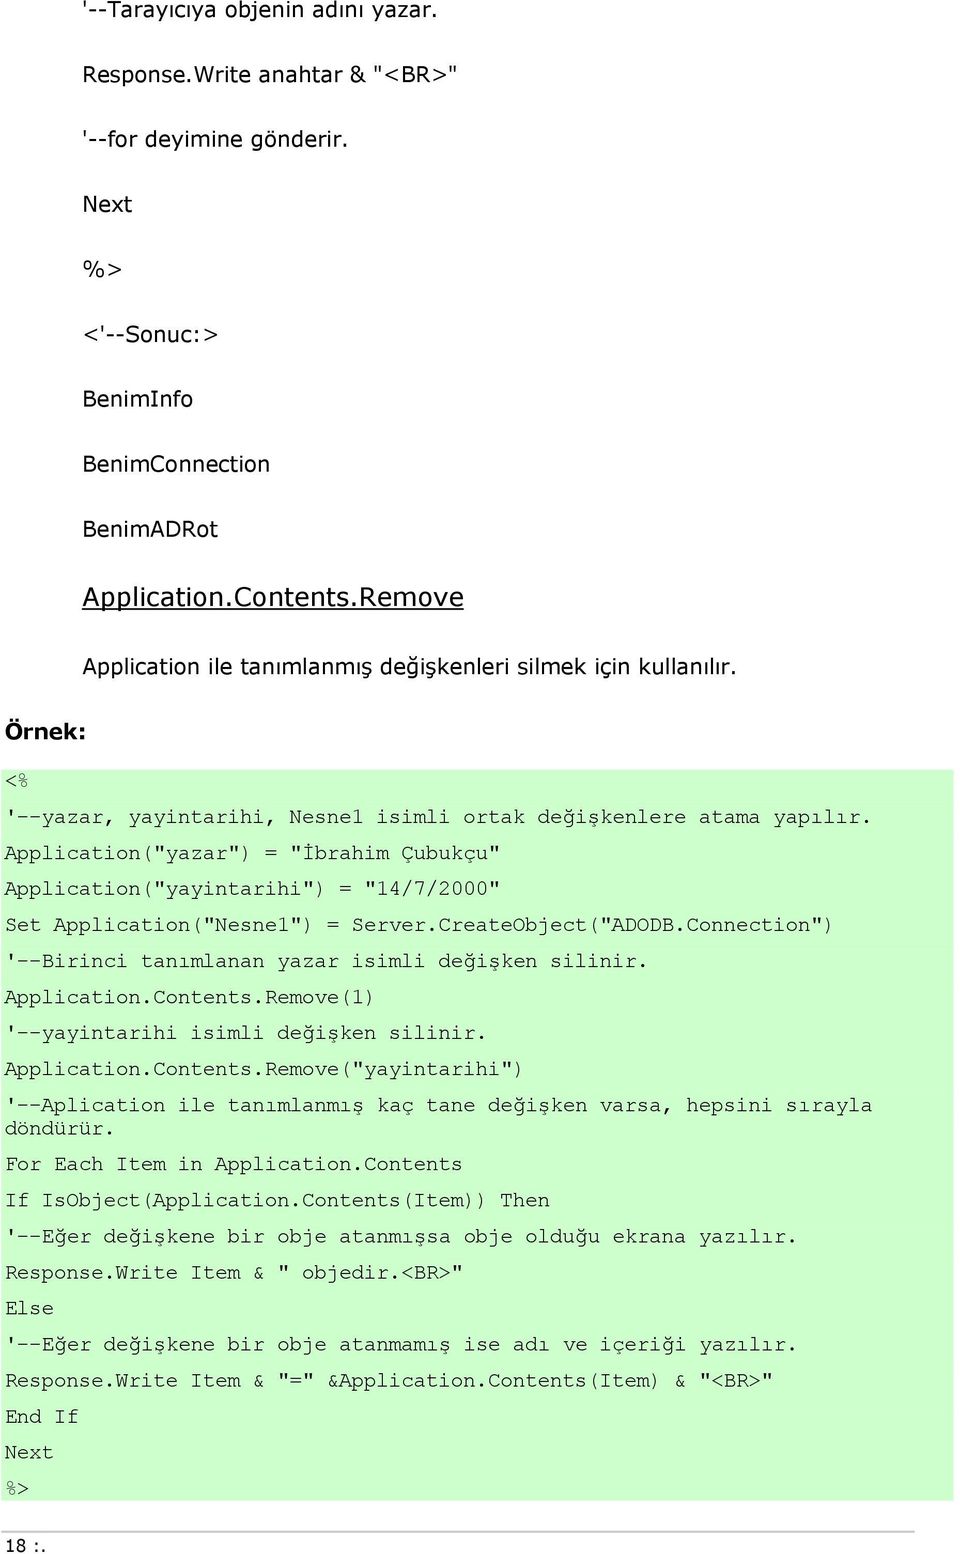 Application("yazar") = "İbrahim Çubukçu" Application("yayintarihi") = "14/7/2000" Set Application("Nesne1") = Server.CreateObject("ADODB.